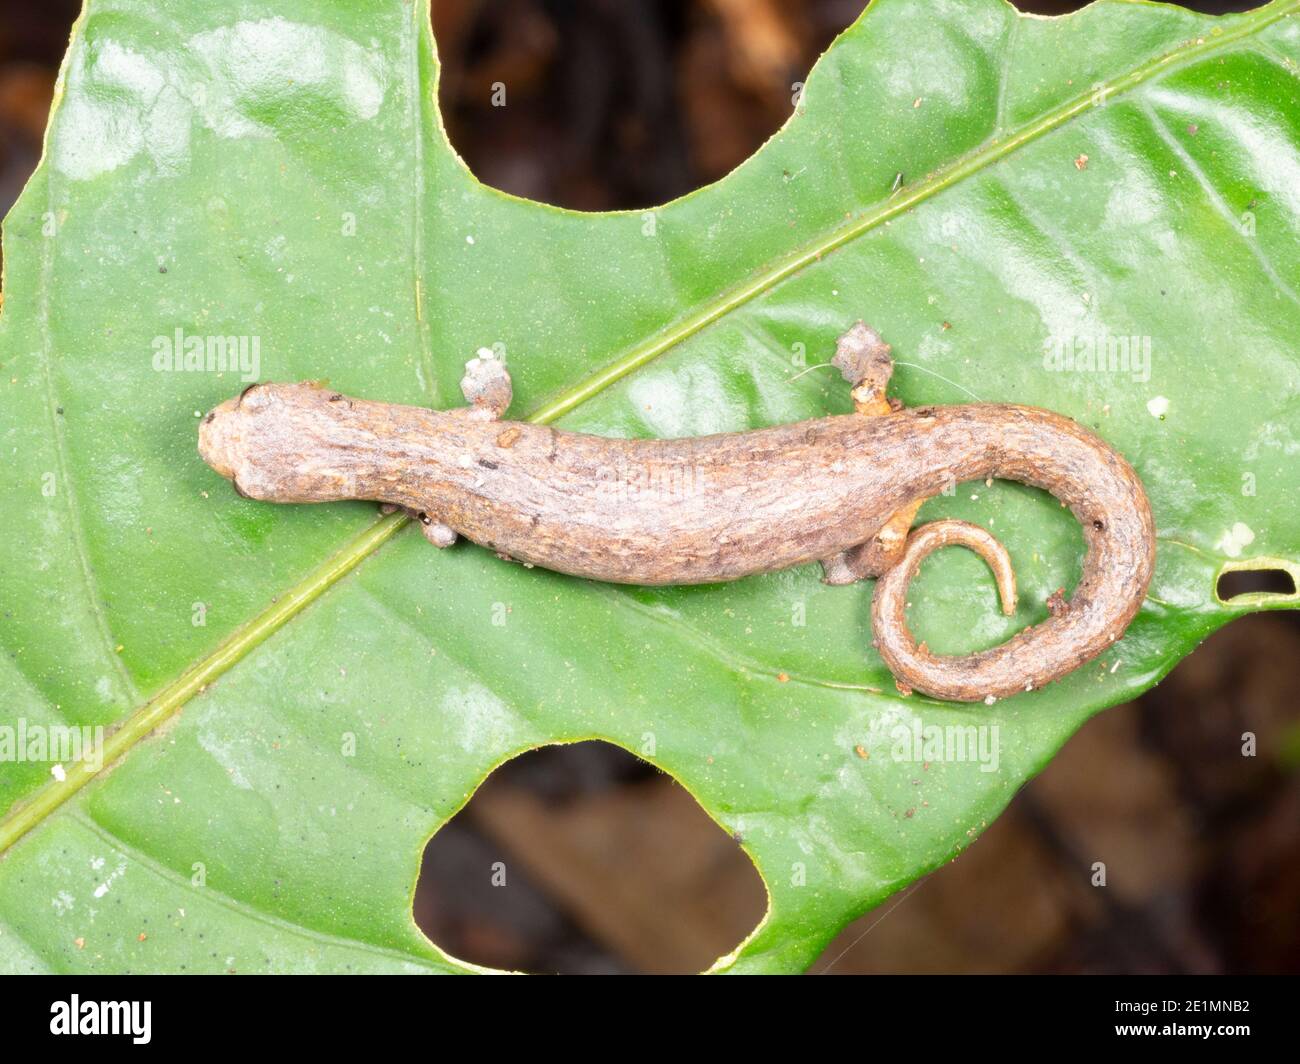 Amazon Climbing Salamander (Bolitoglossa peruviana) in the rainforest understory at night, Ecuador Stock Photo